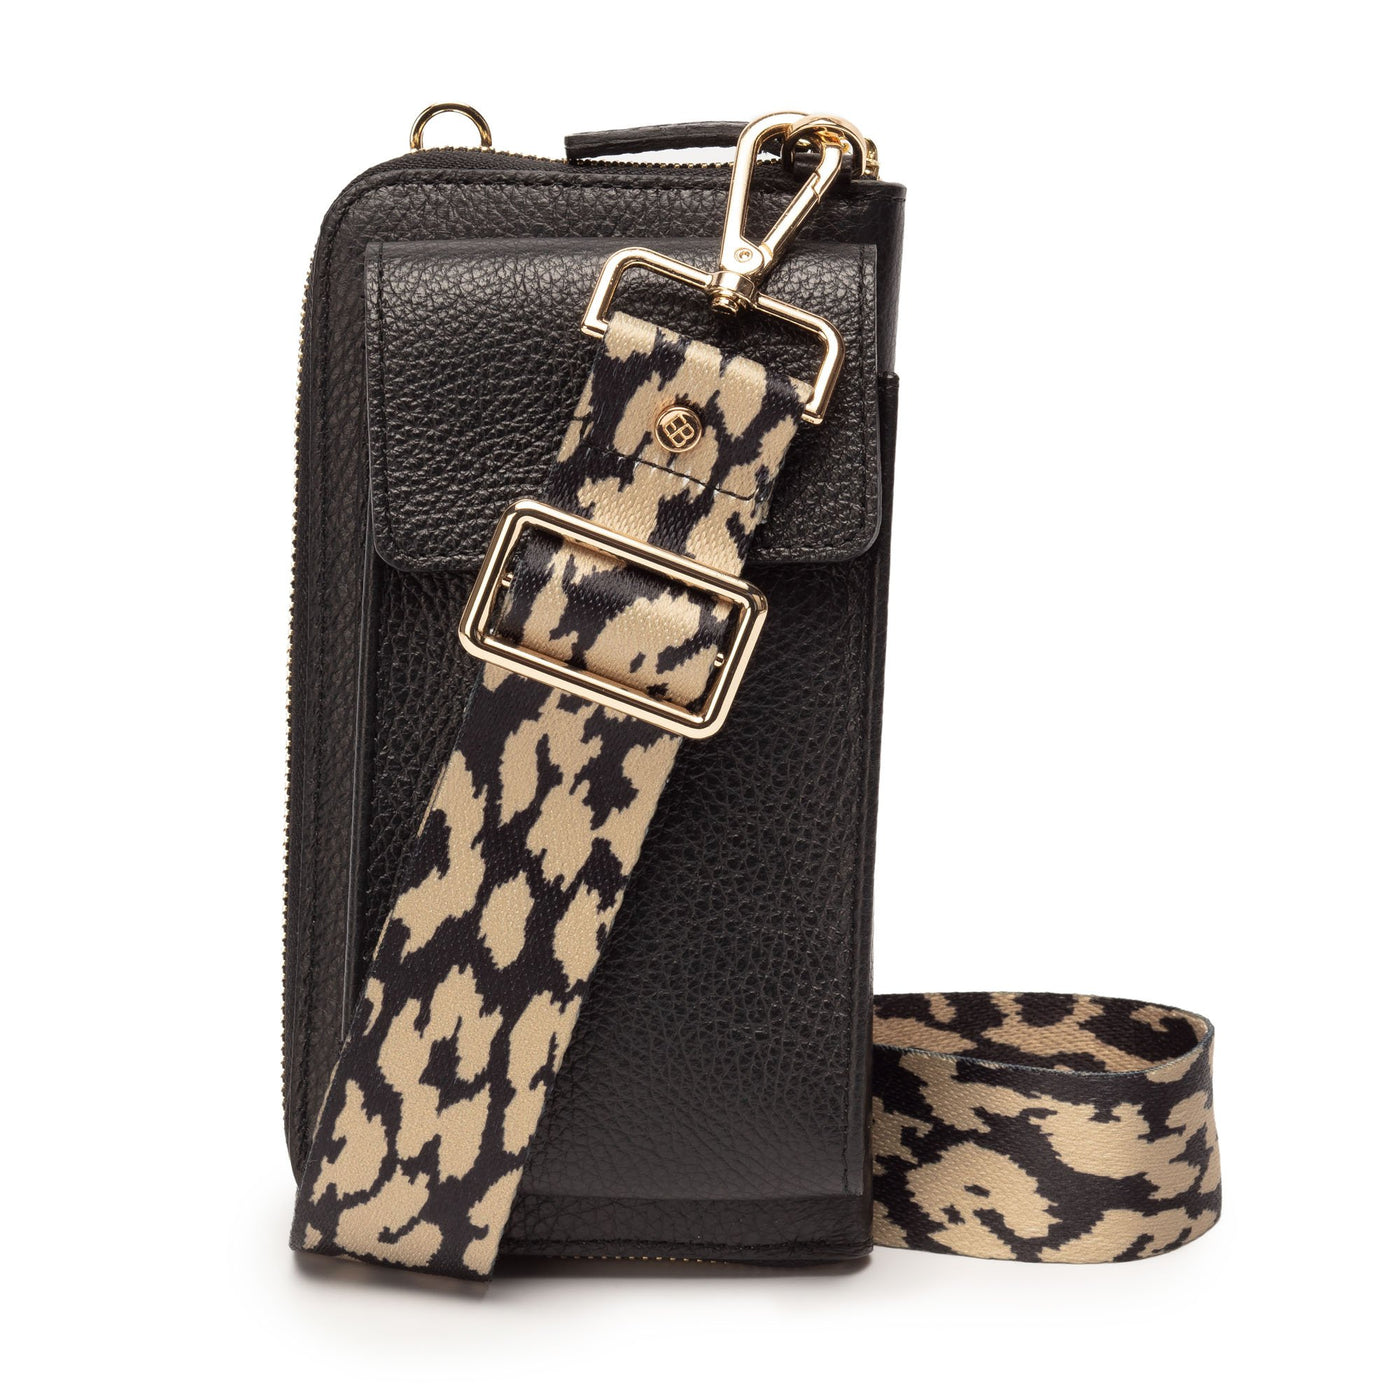 Elie Beaumont Designer Leather Phone Bag - Black (GOLD Fittings)